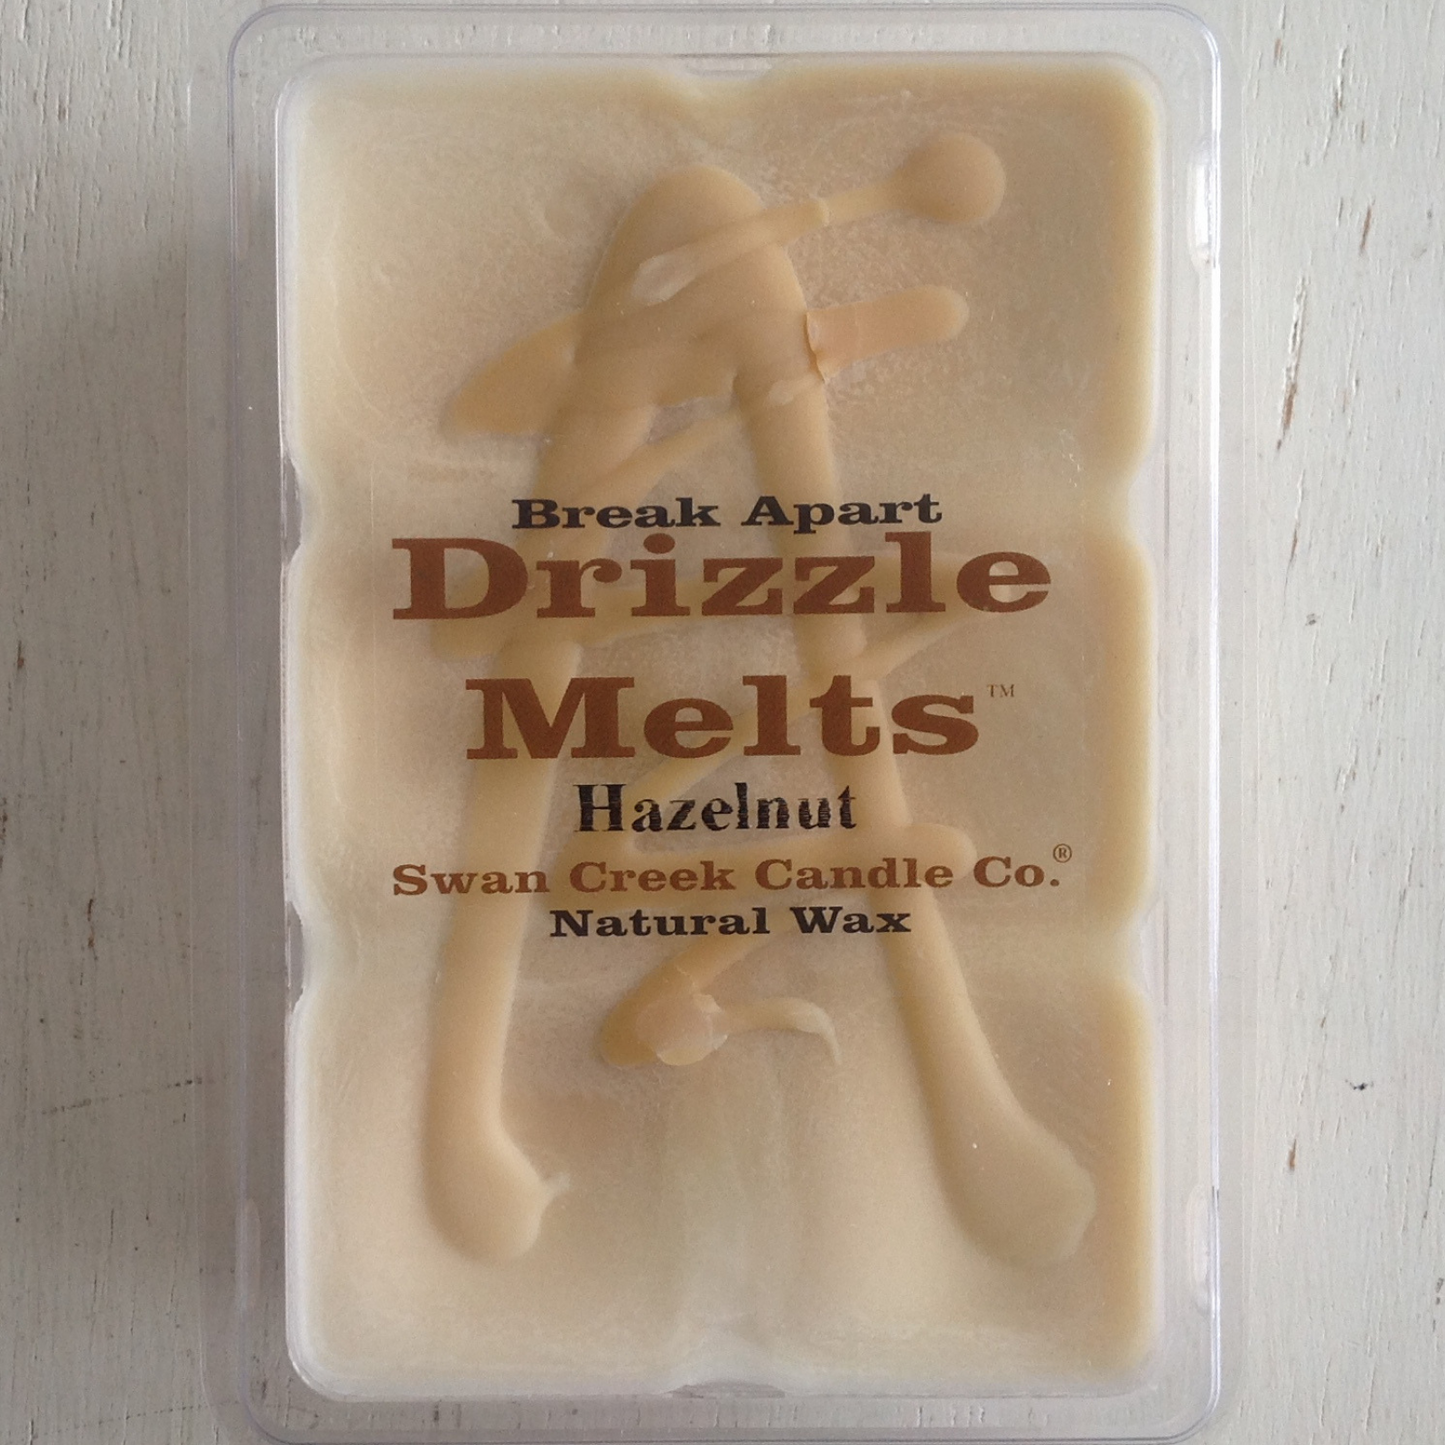 Swan Creek Candle Company Herbal Drizzle Wax Melts Hazelnut